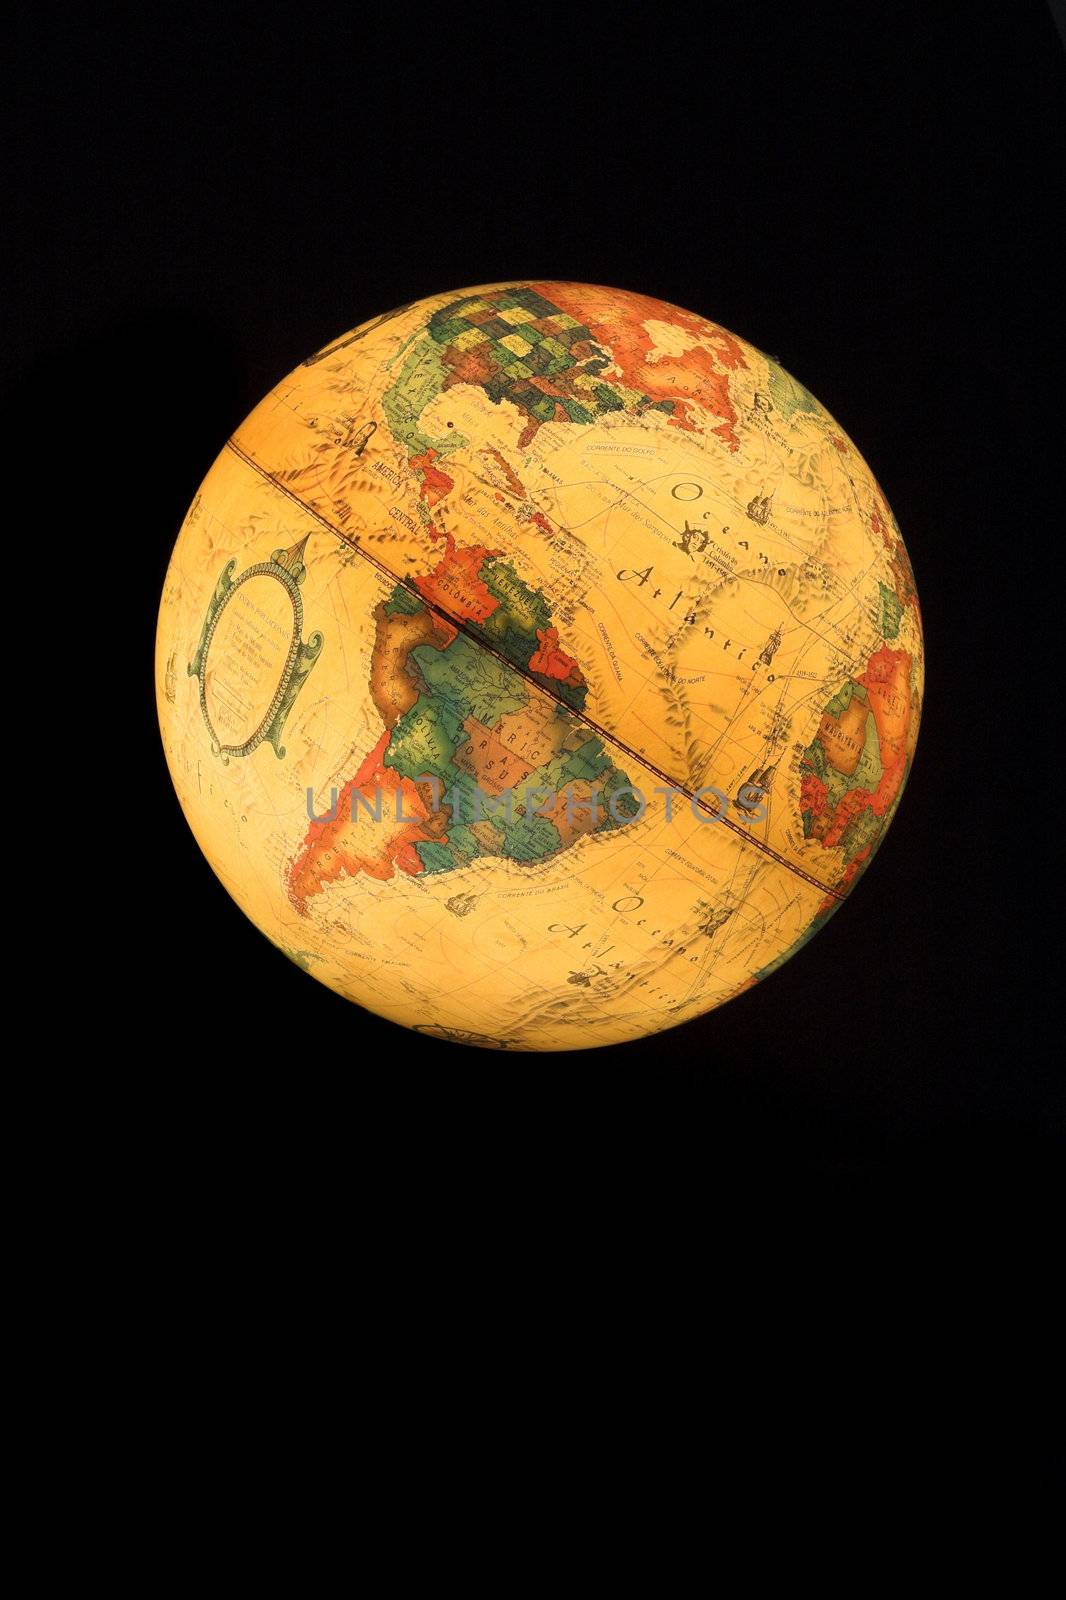 Iluminated globe by Iko